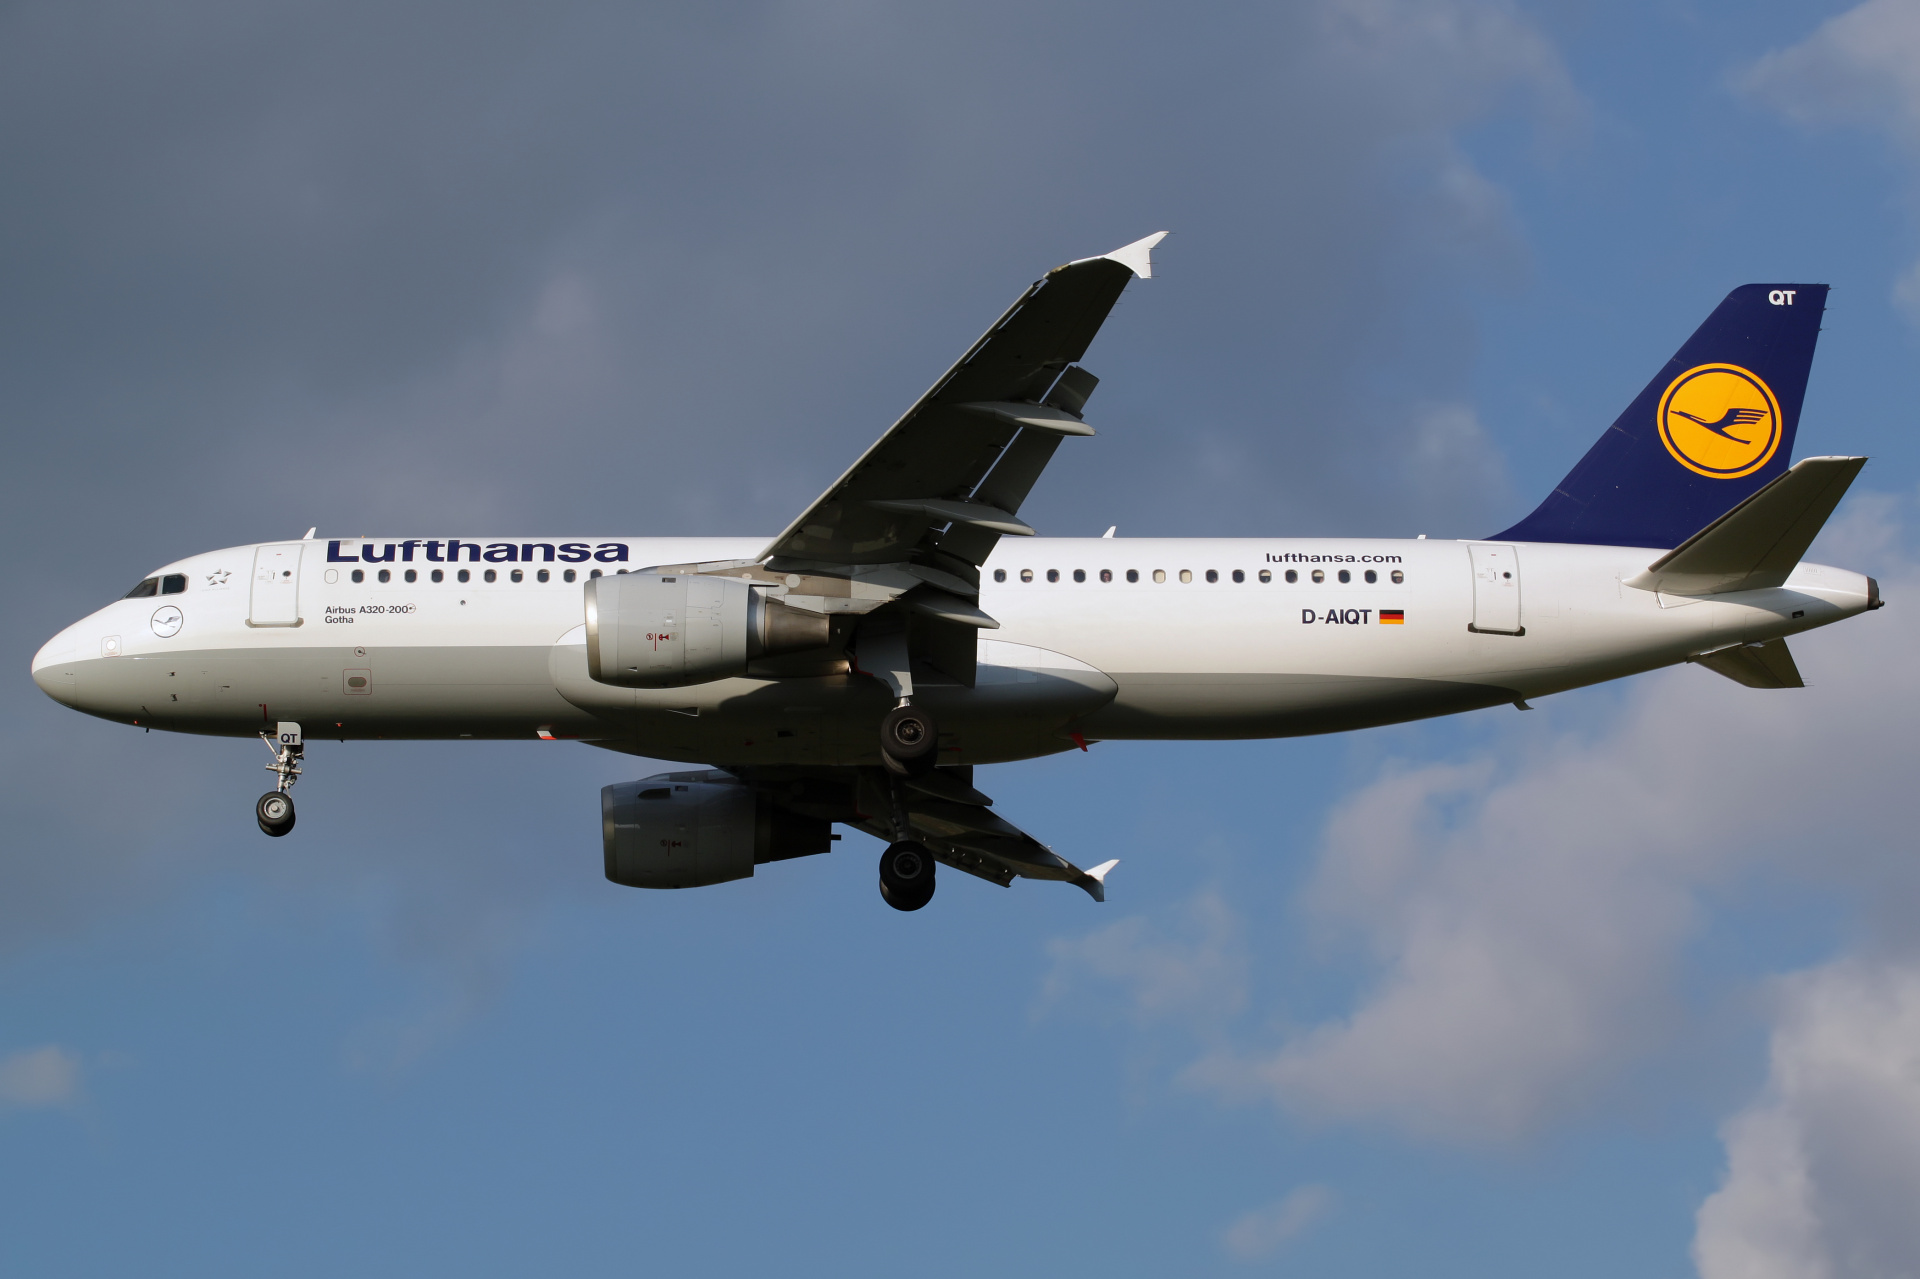 D-AIQT (Aircraft » EPWA Spotting » Airbus A320-200 » Lufthansa)